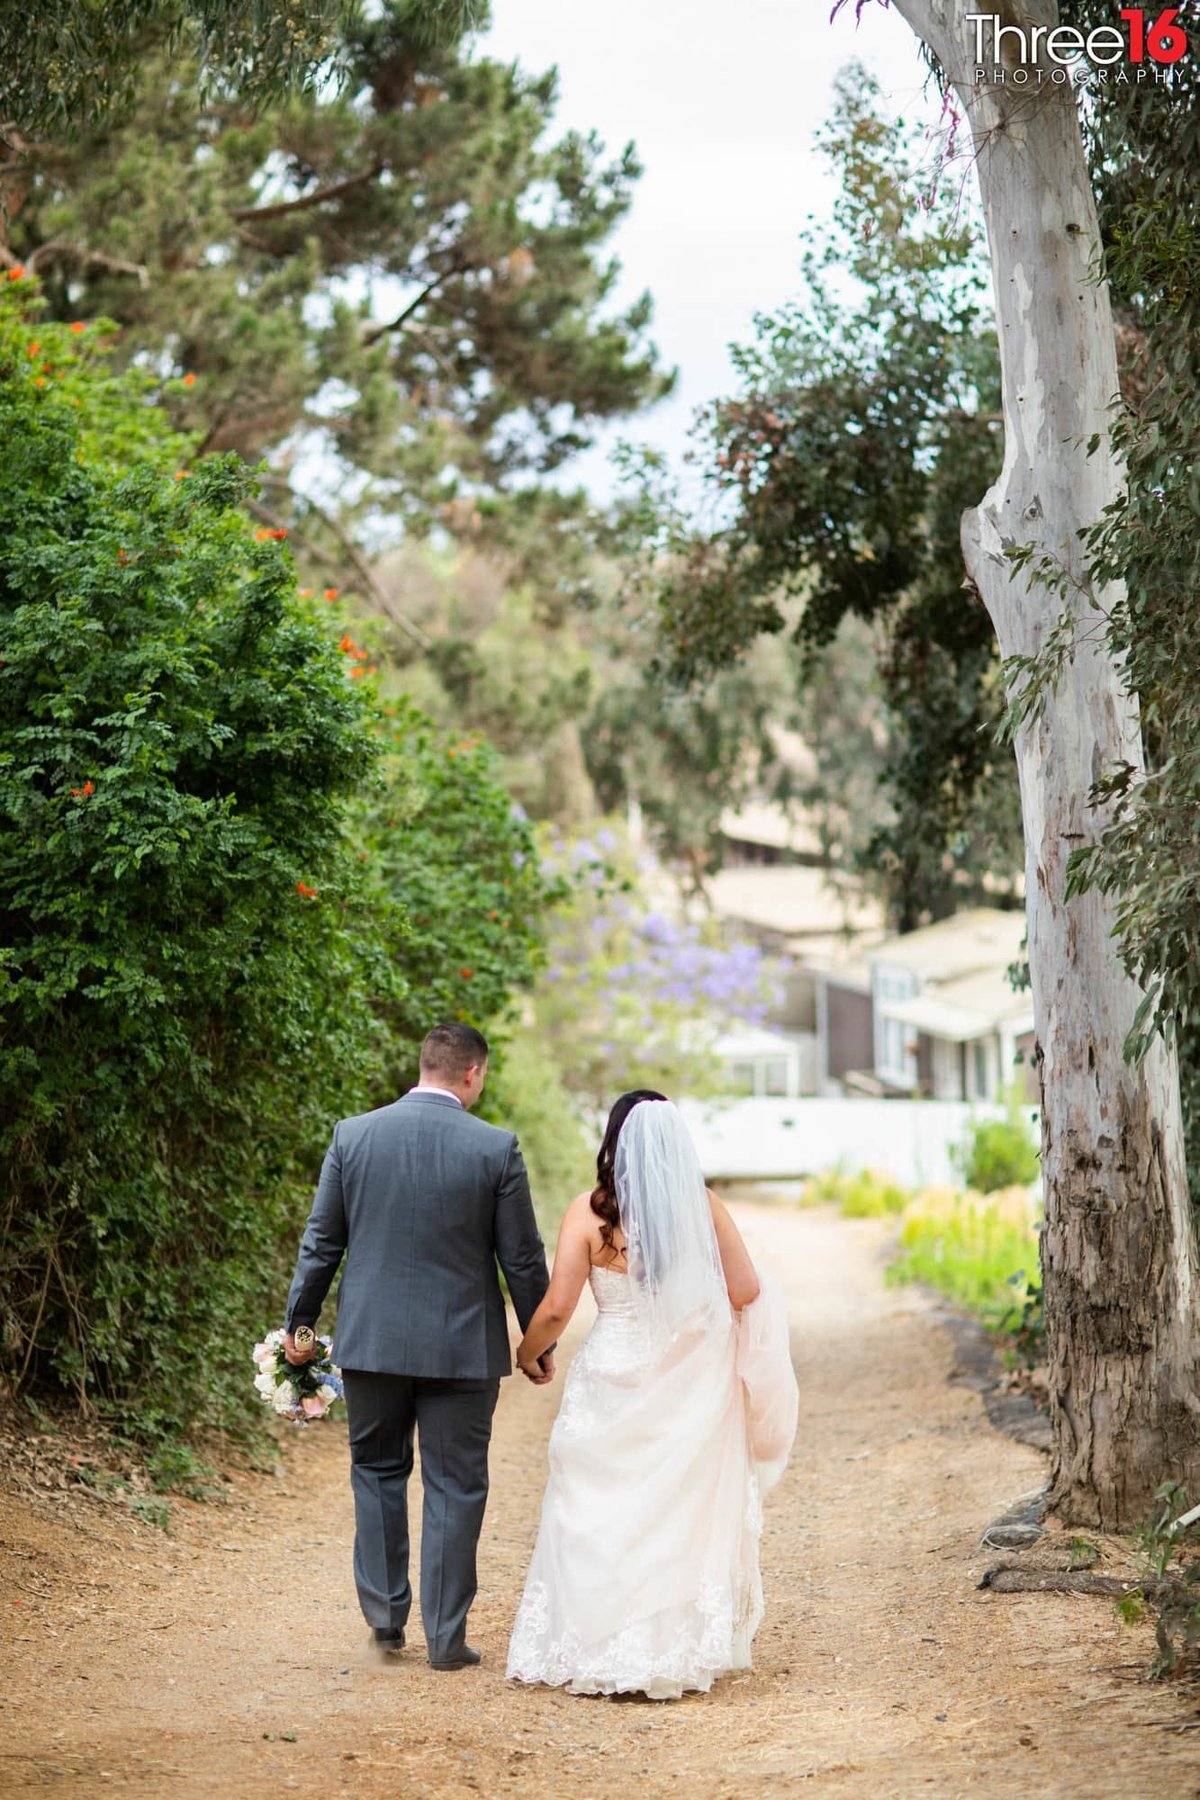 Bride and Groom walk away  holding hands